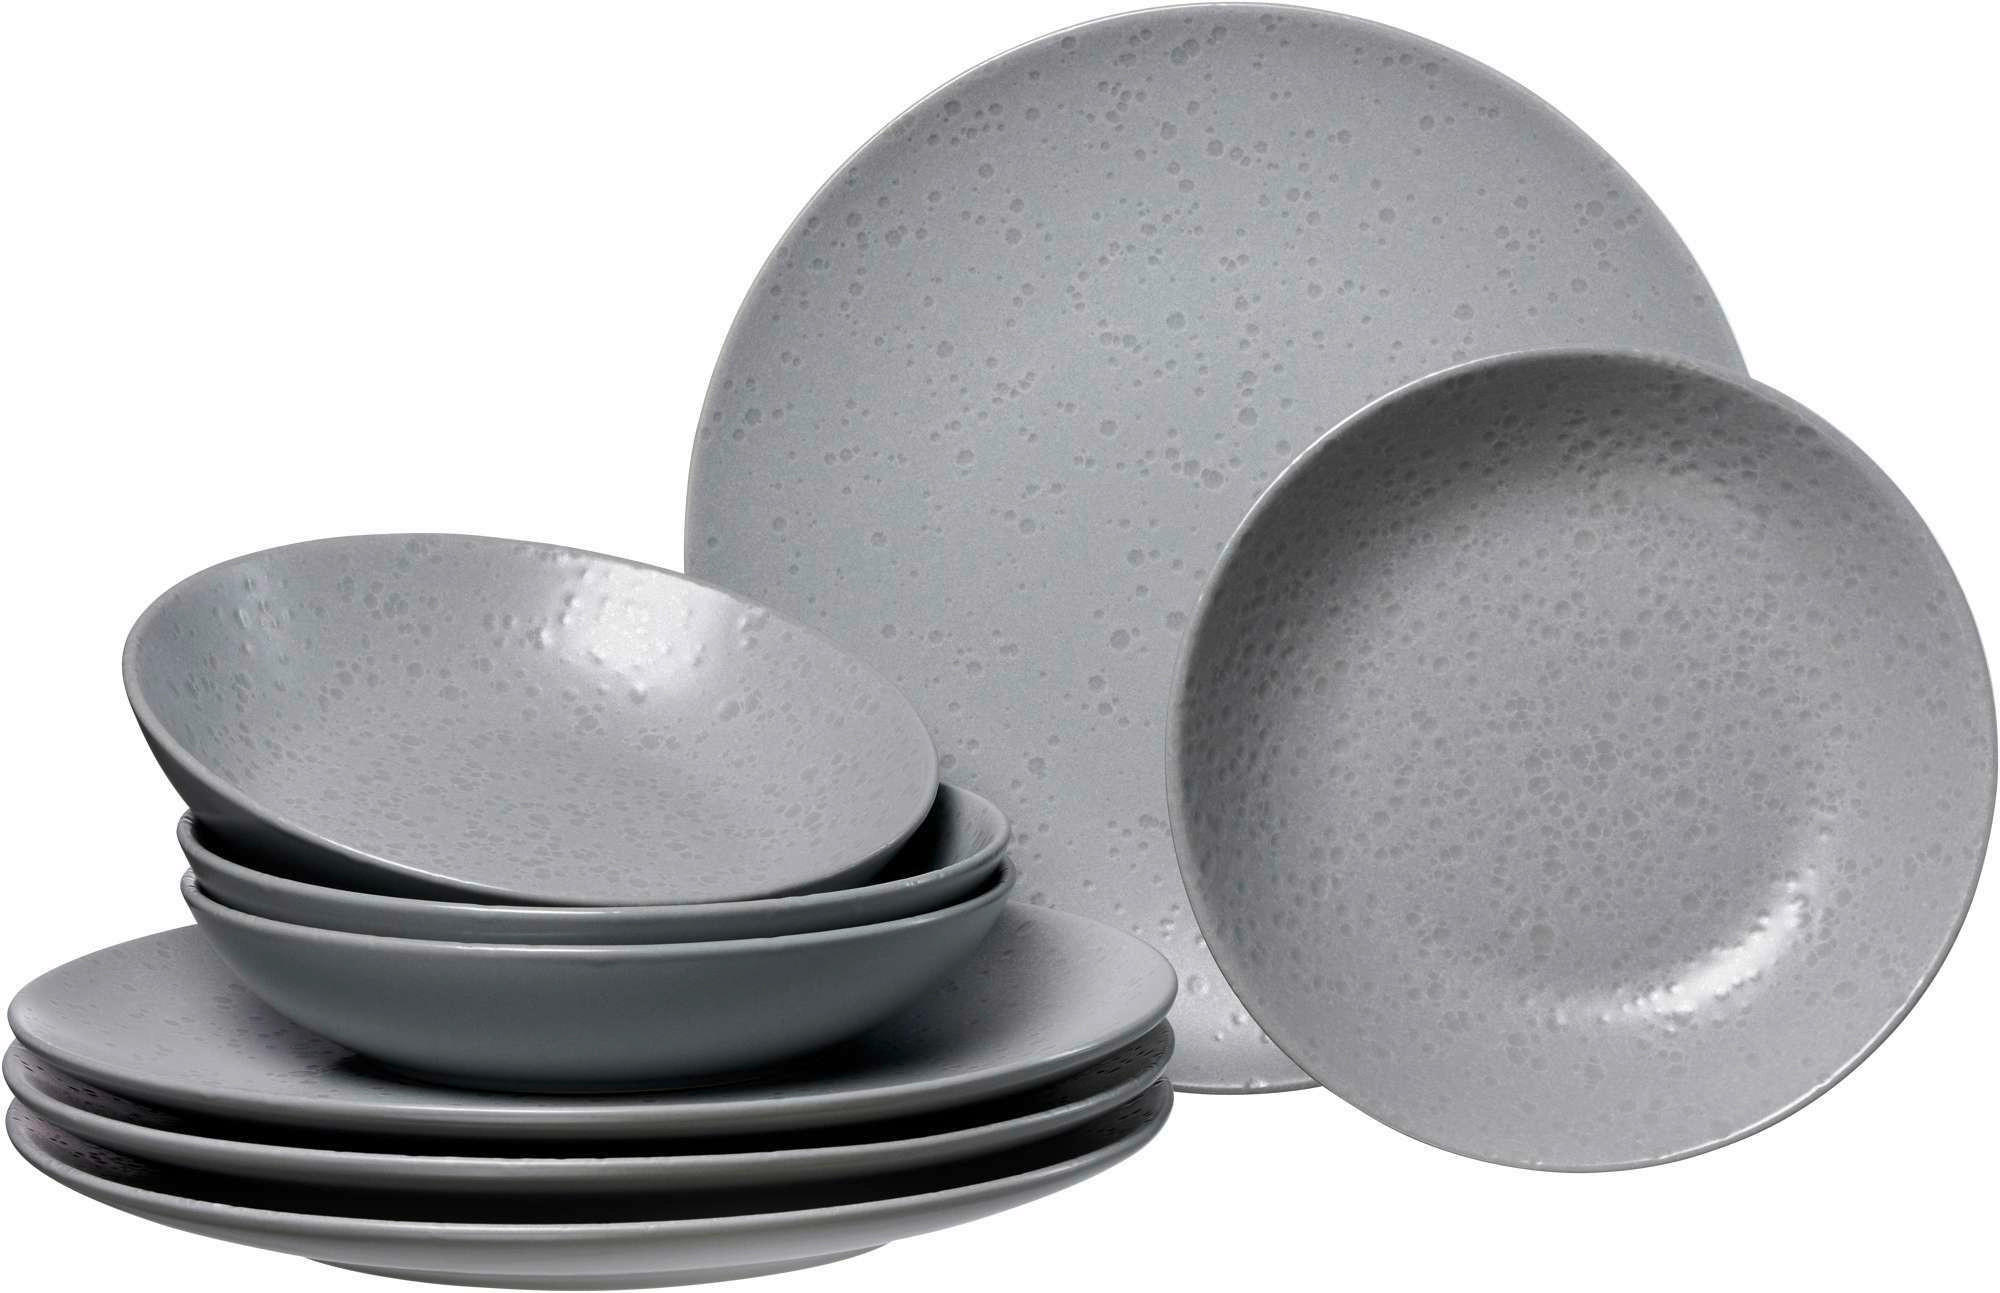 TAFELSERVICE KITWE  8-teilig  - Grau, Trend, Keramik (29/17/29cm) - Ritzenhoff Breker